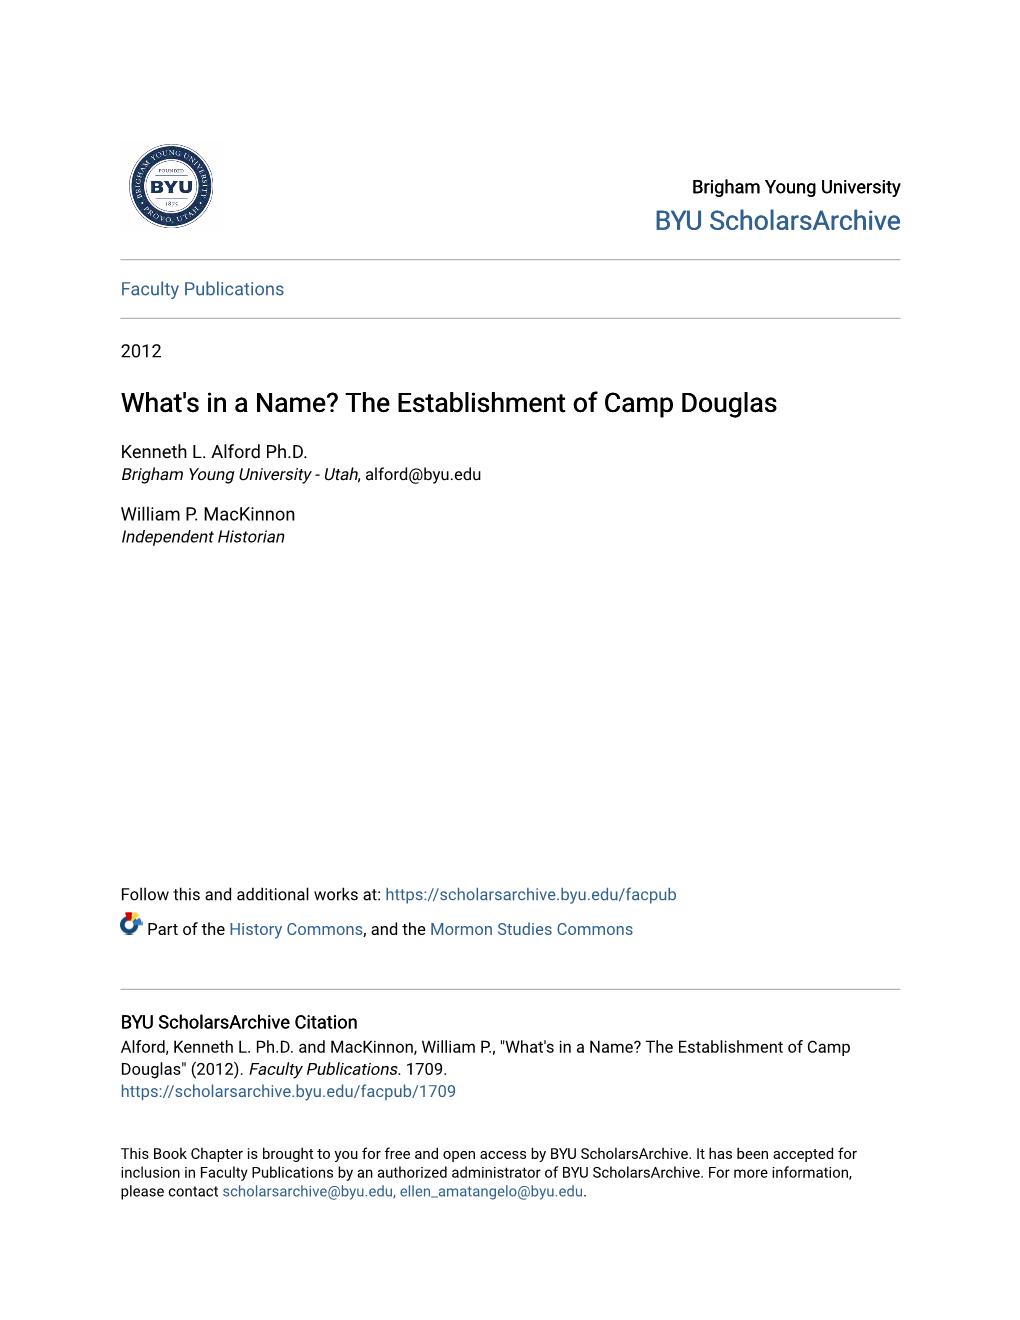 The Establishment of Camp Douglas